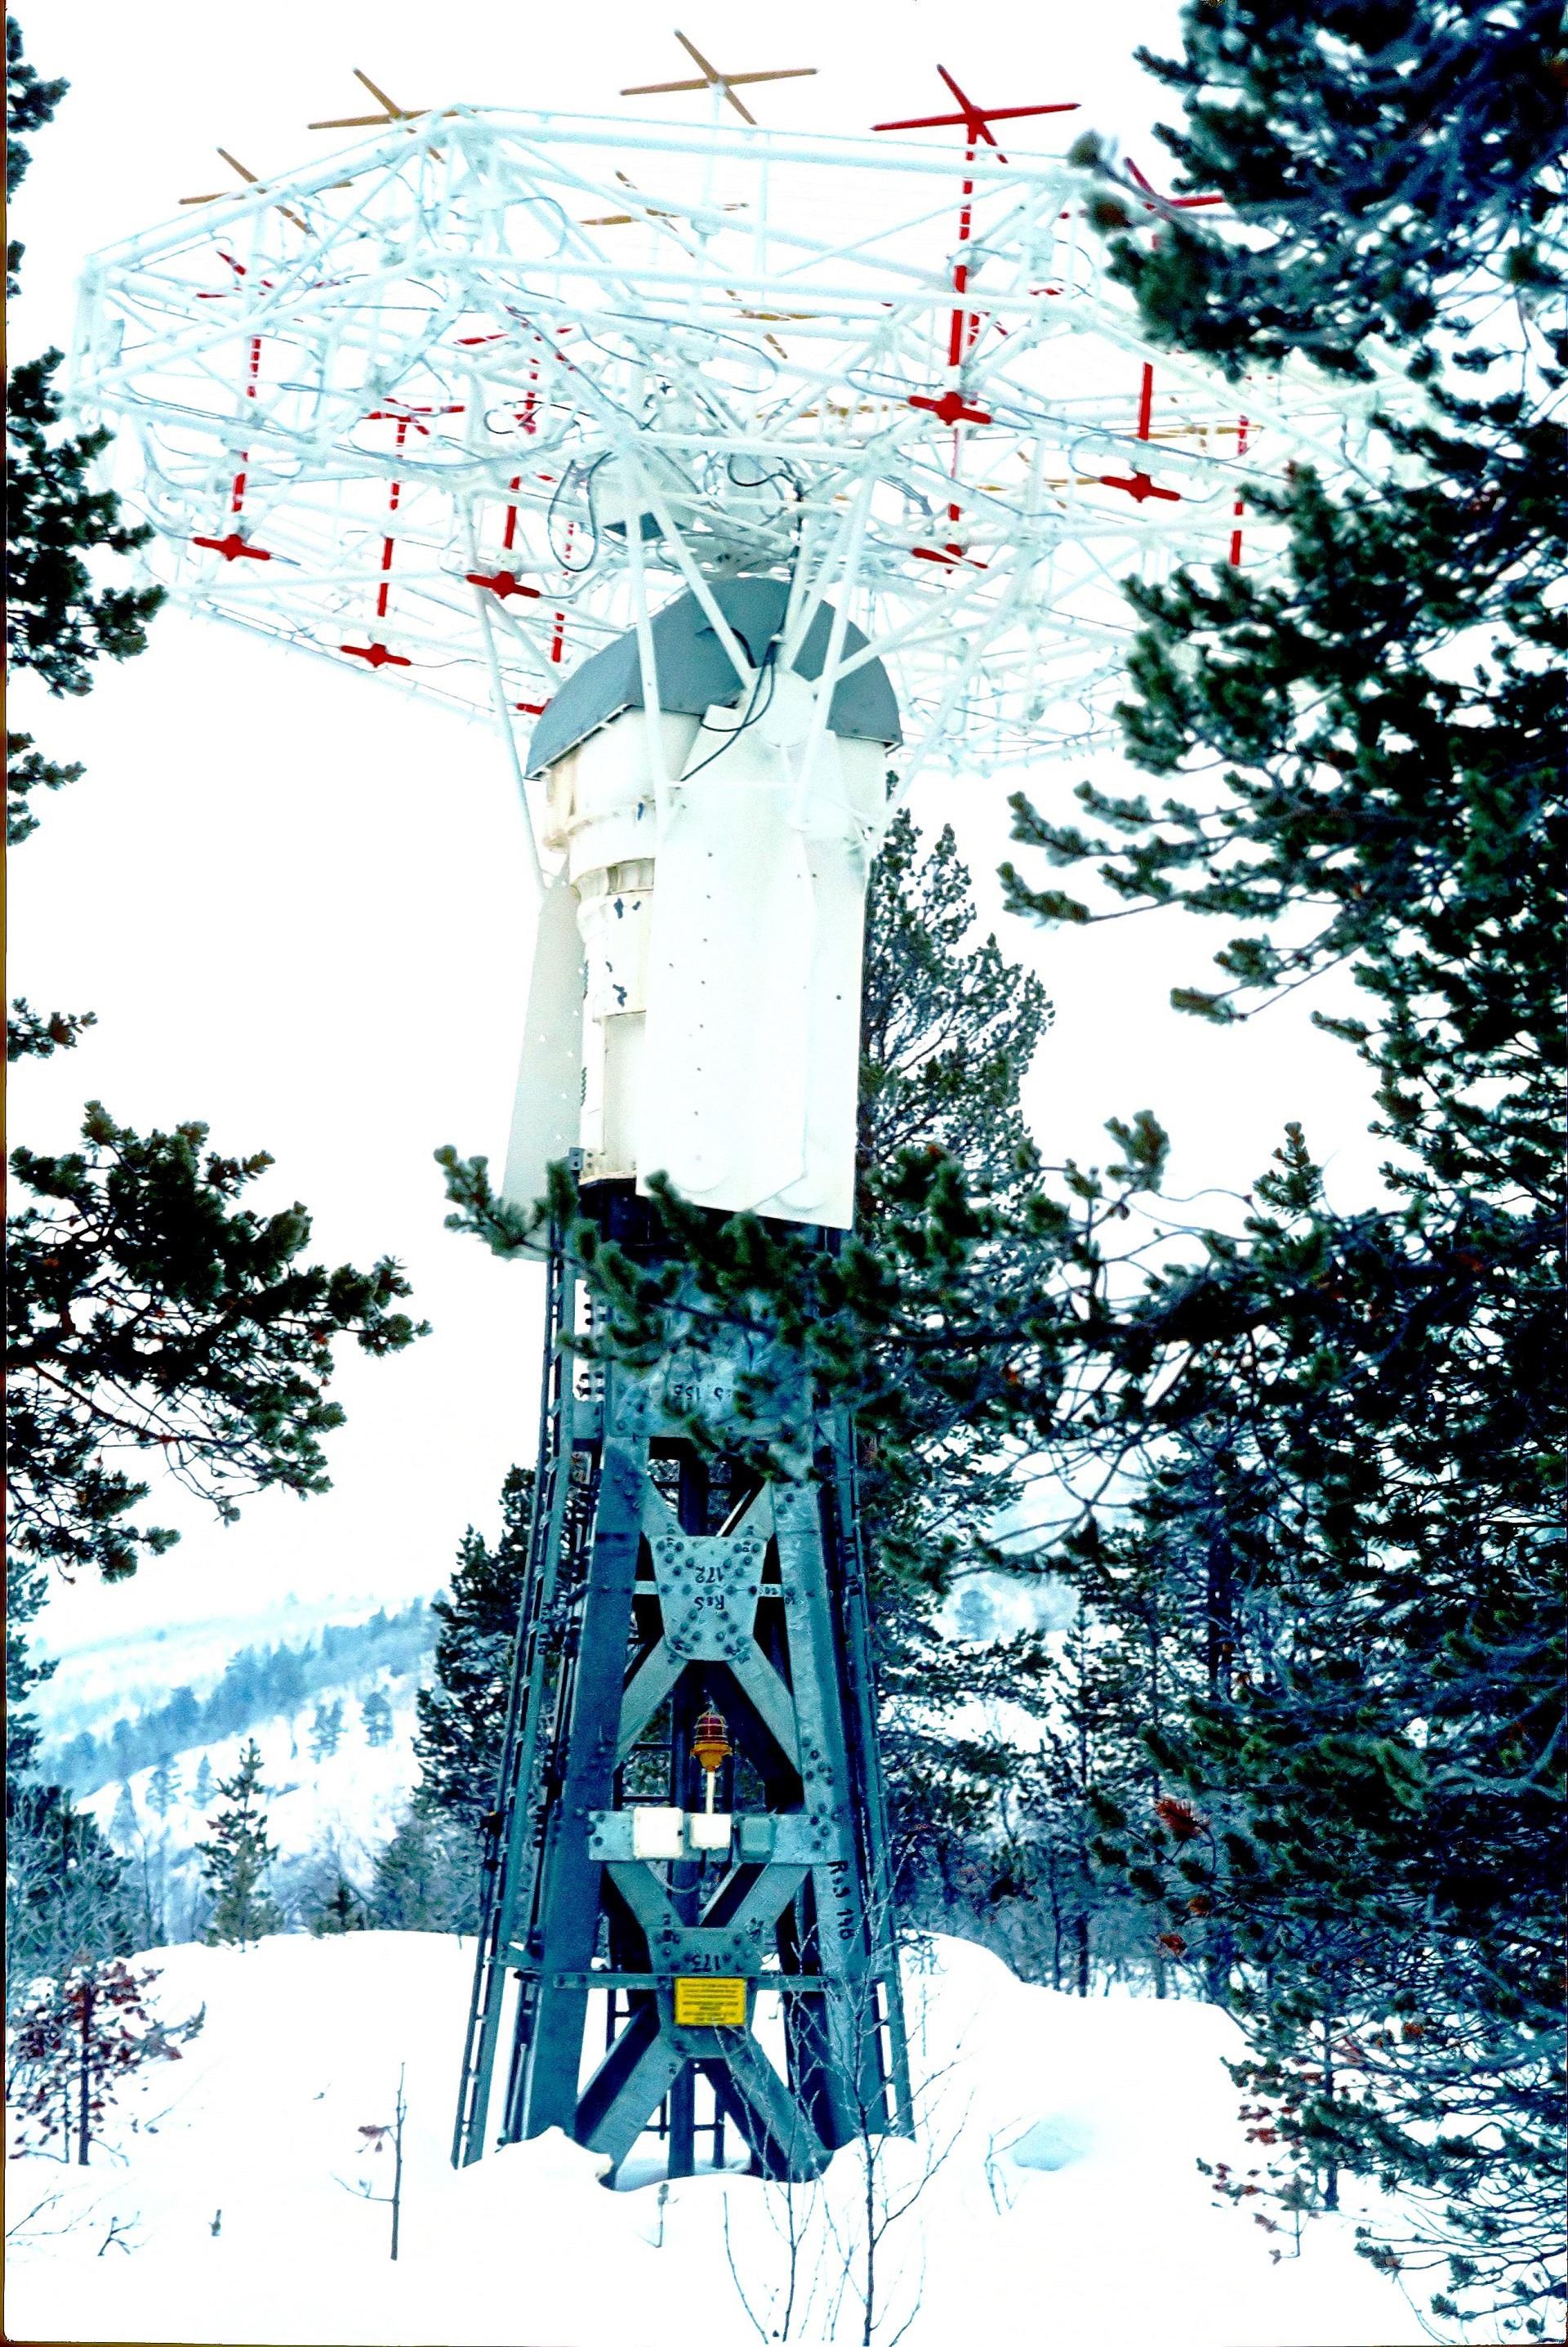 AZUR-Empfangsantenne in Finnland: Kreuz-Dipol-Backfire-Antenne im VHF-Bereich (very high frequency).